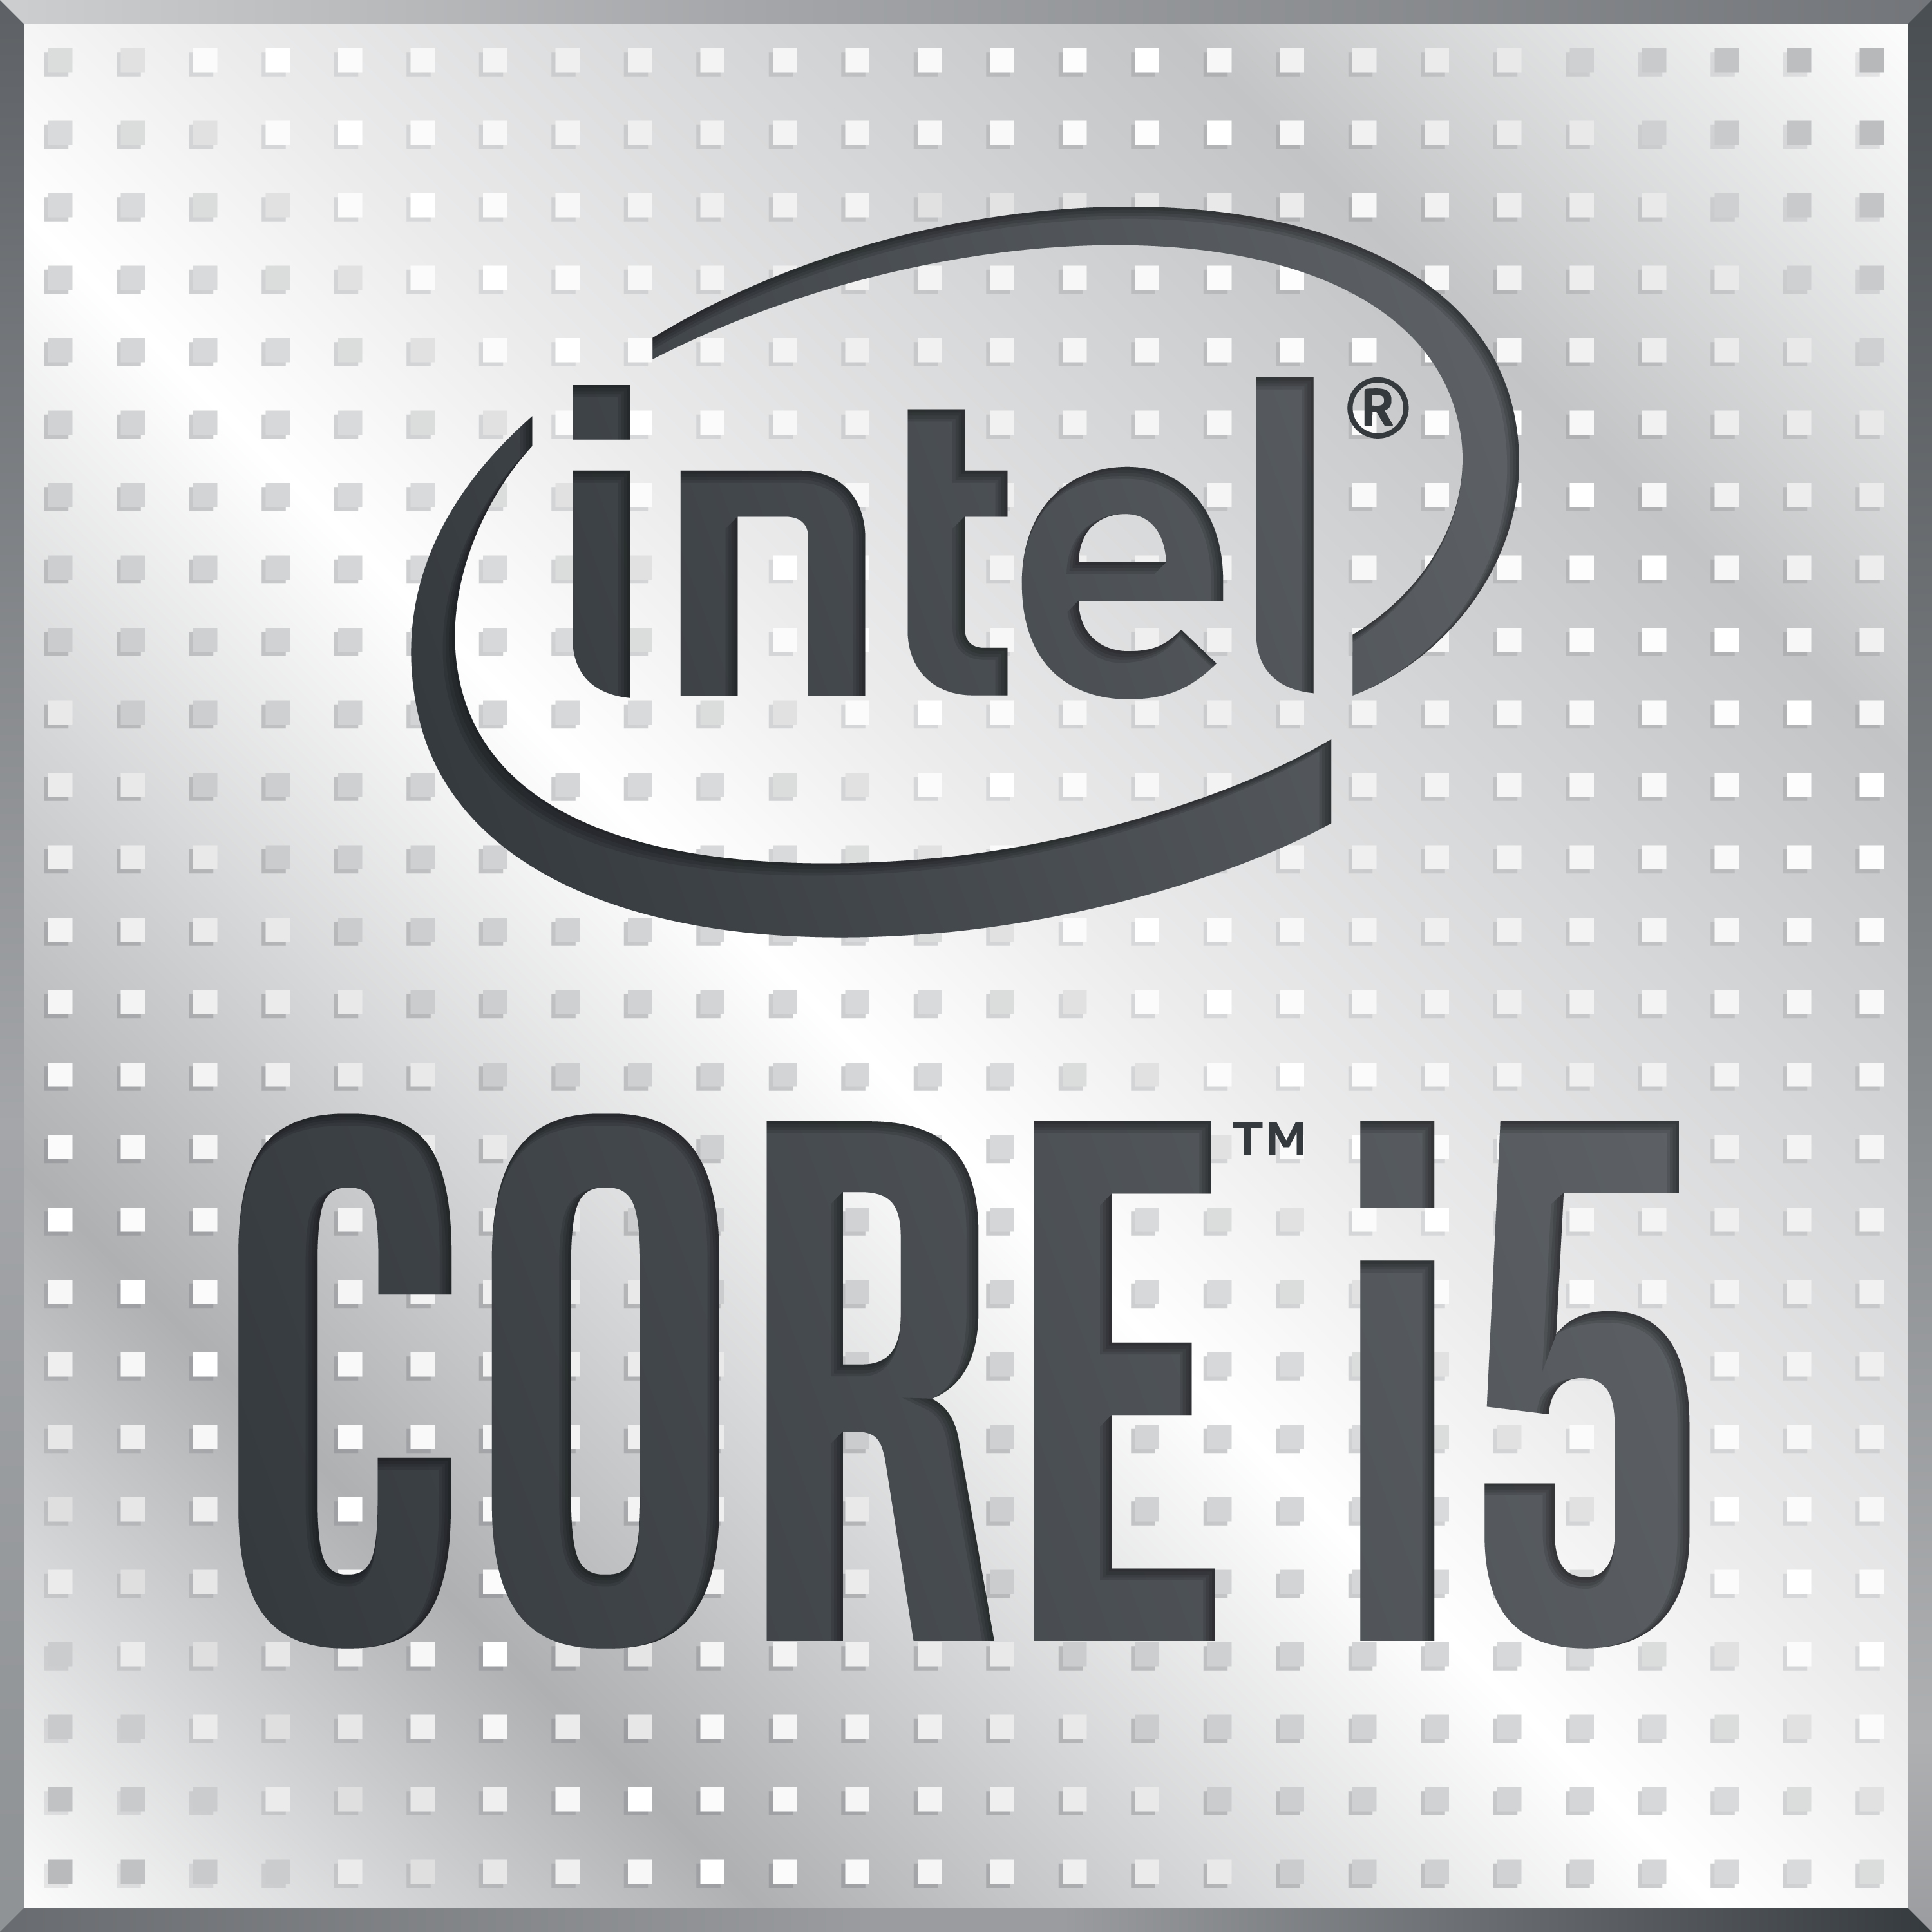 Intel i5-10500